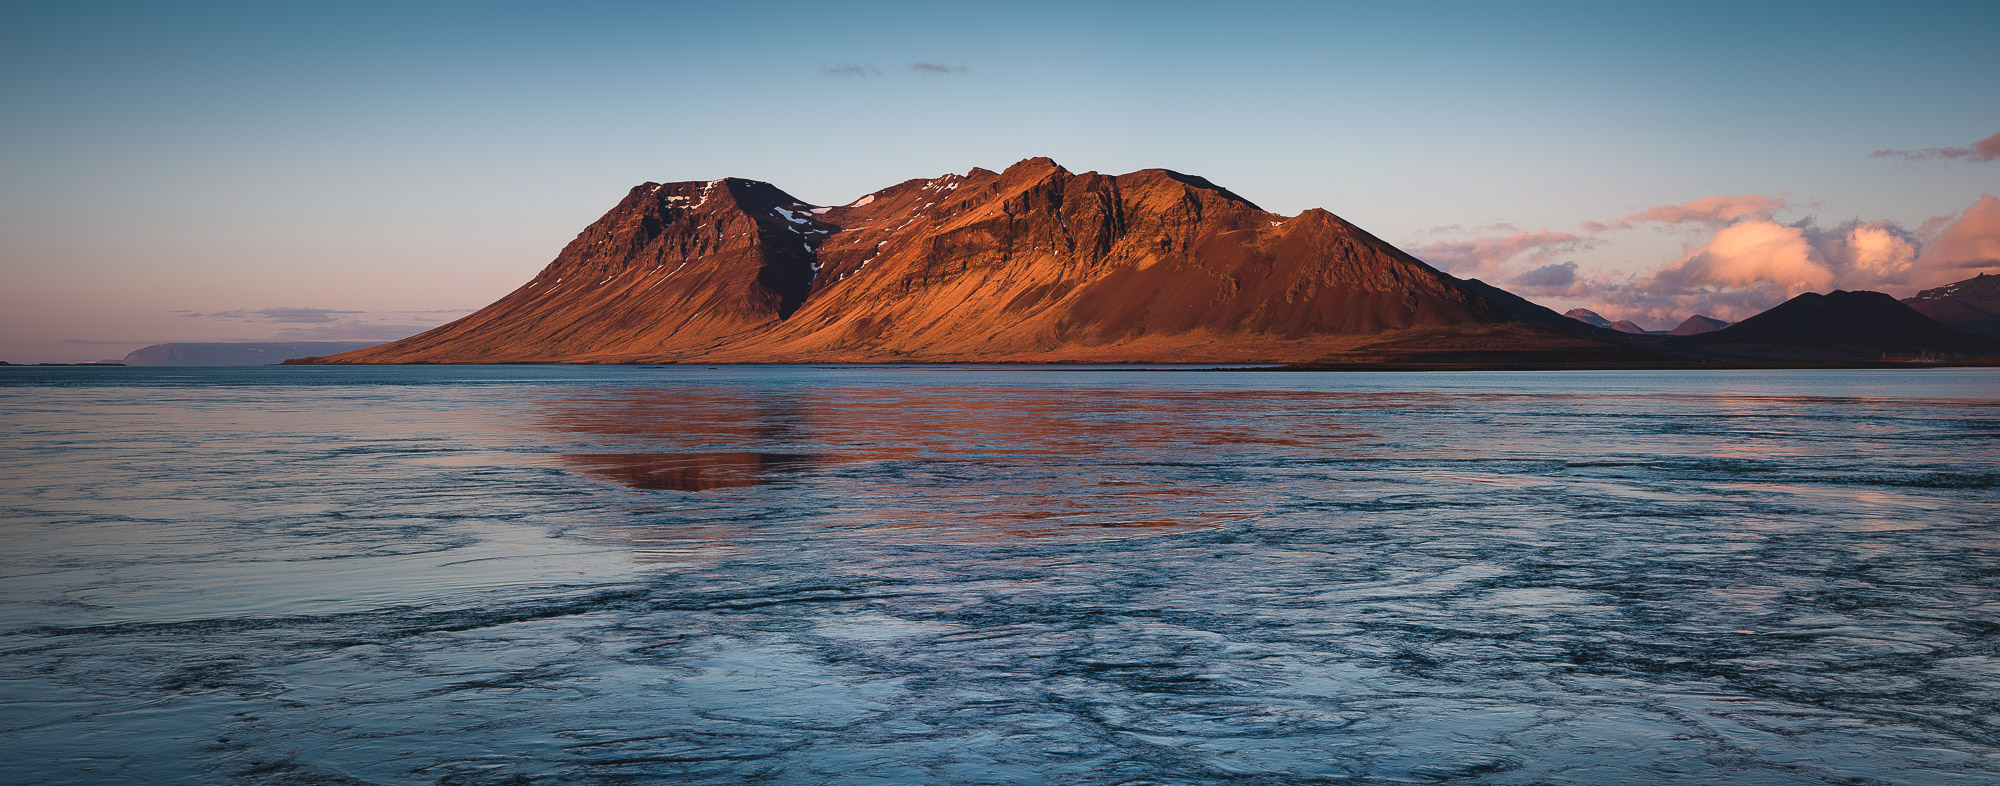 Bjarnarhafnarfjall. 15 frame panorama. 91 megpixels, Sigma 105mm f/1.4 @ f/5.6, 1/200th, ISO 100